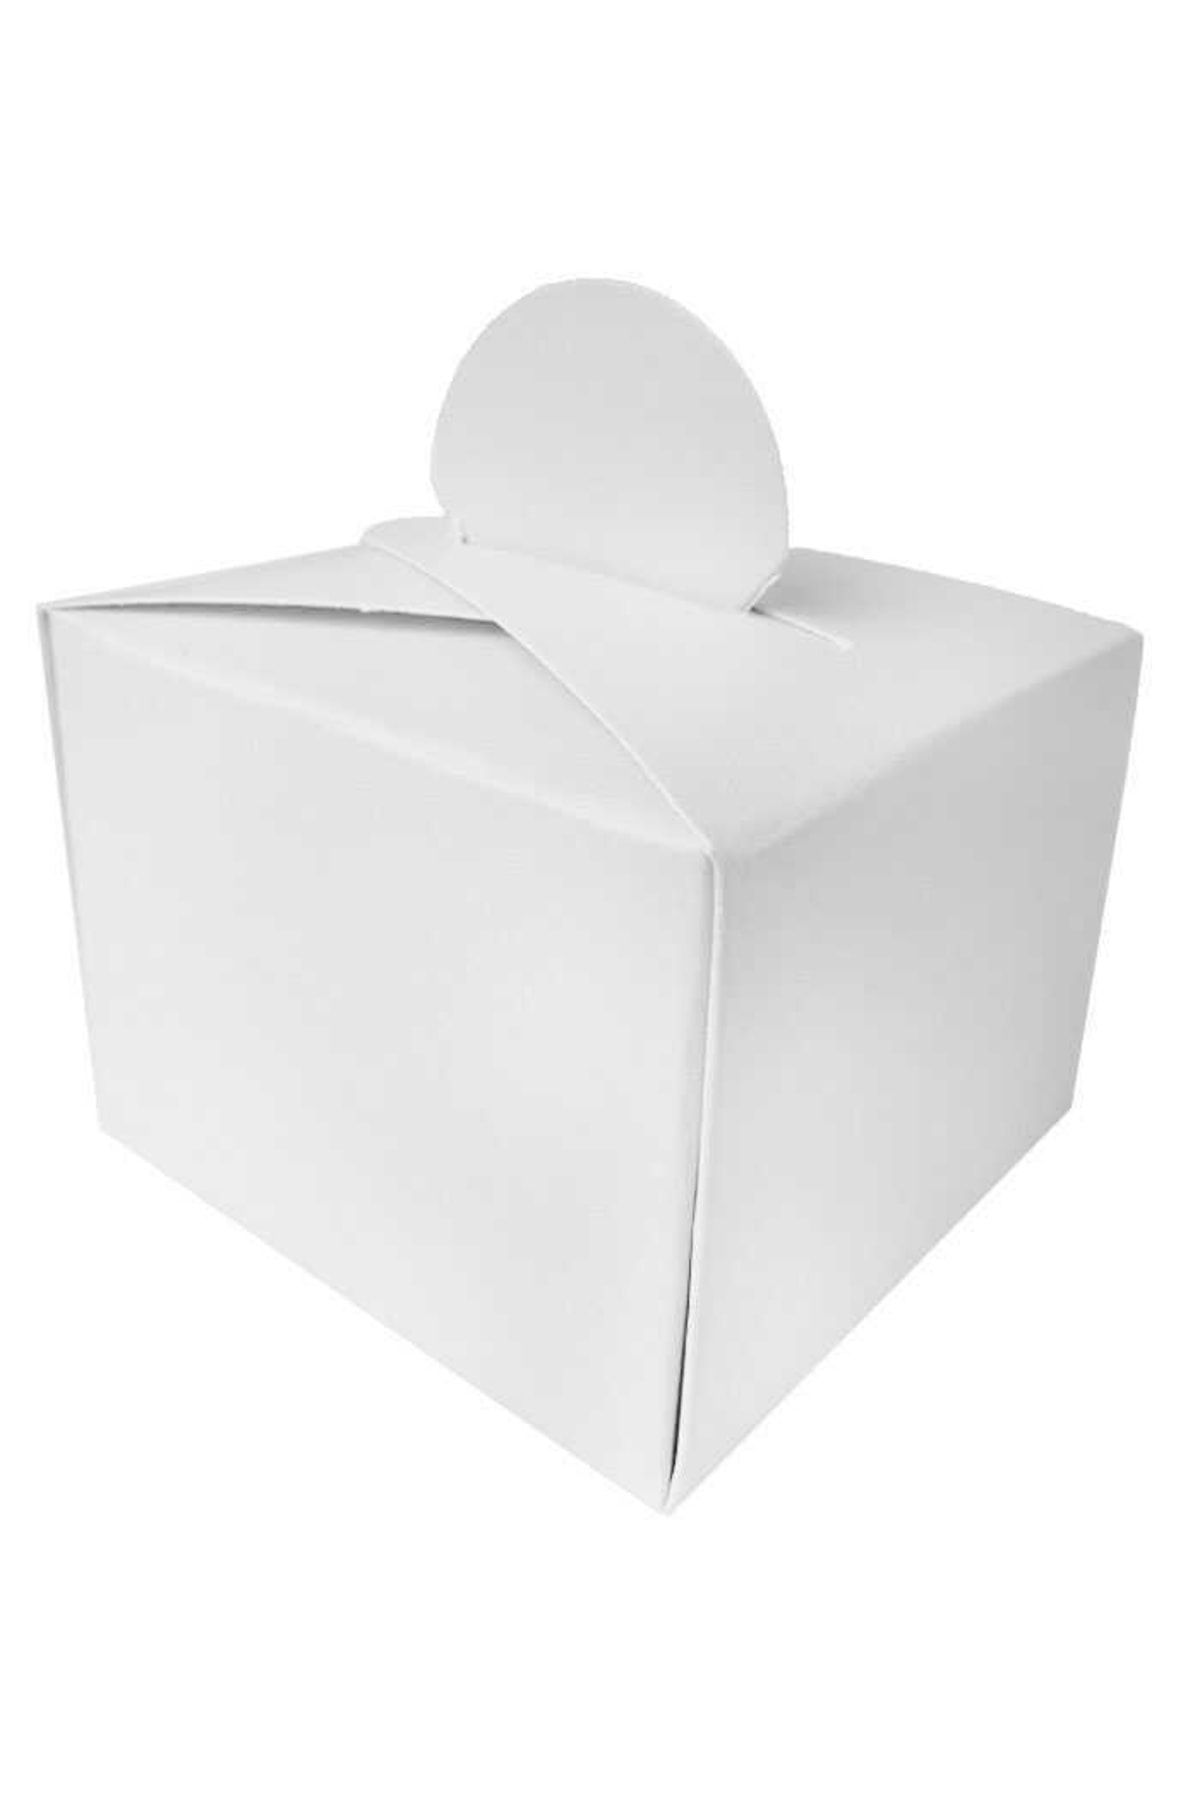 Acar Süs Lokumluk Karton Kutu Beyaz 25 Adet